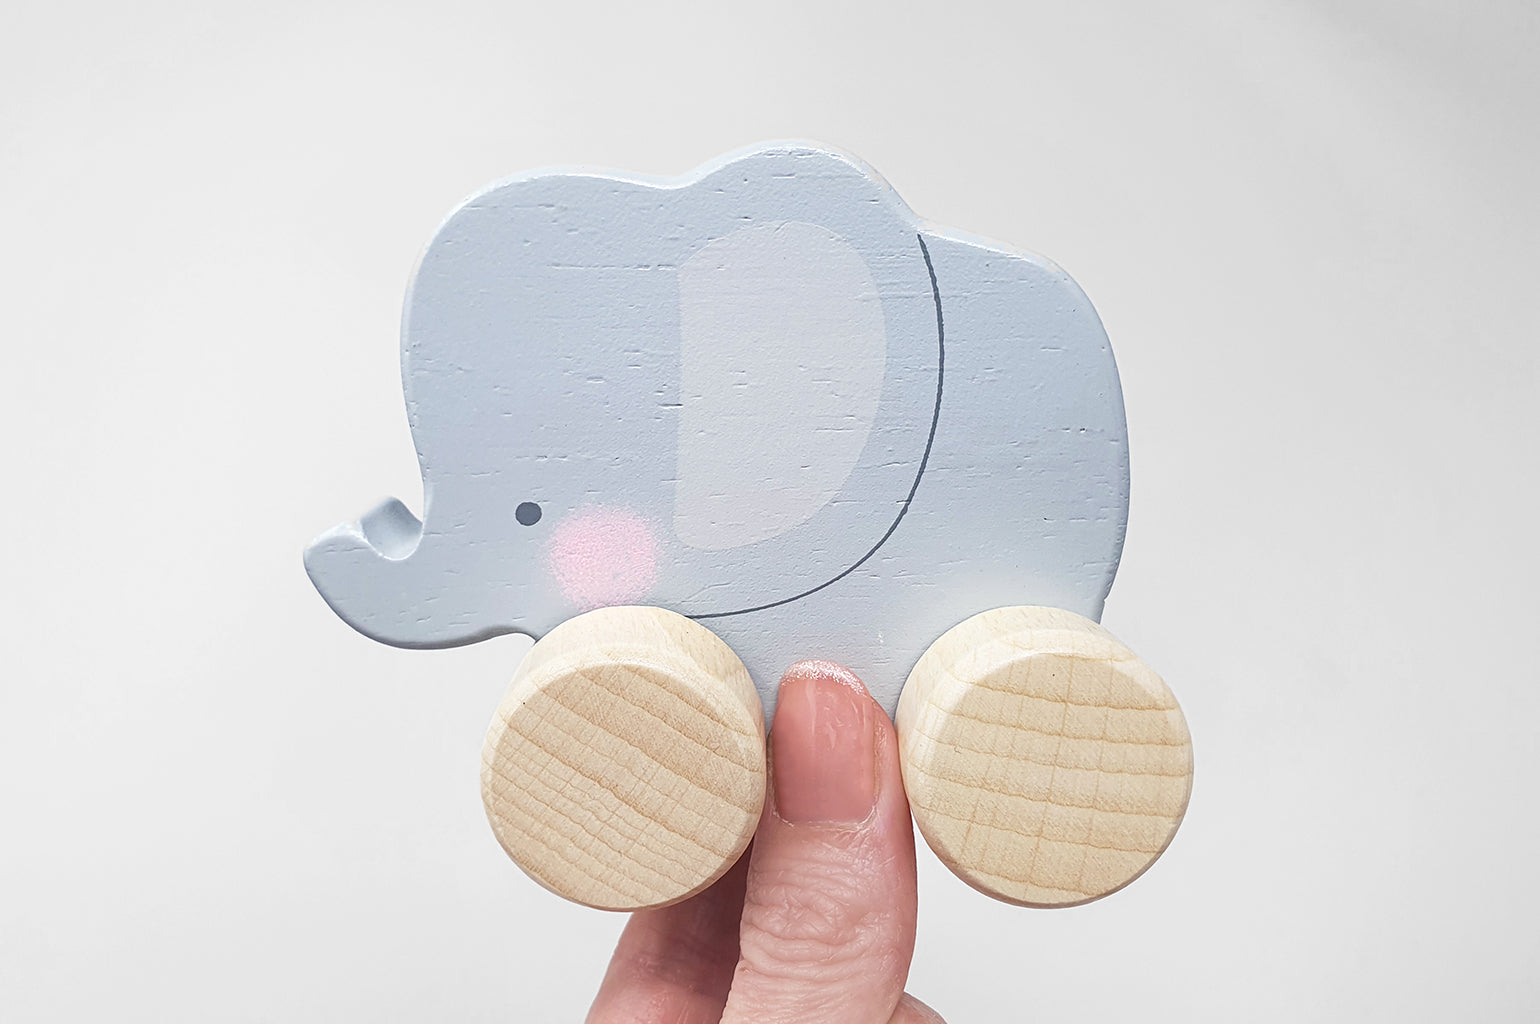 Wooden Elephant on wheels Toddler Push Toy